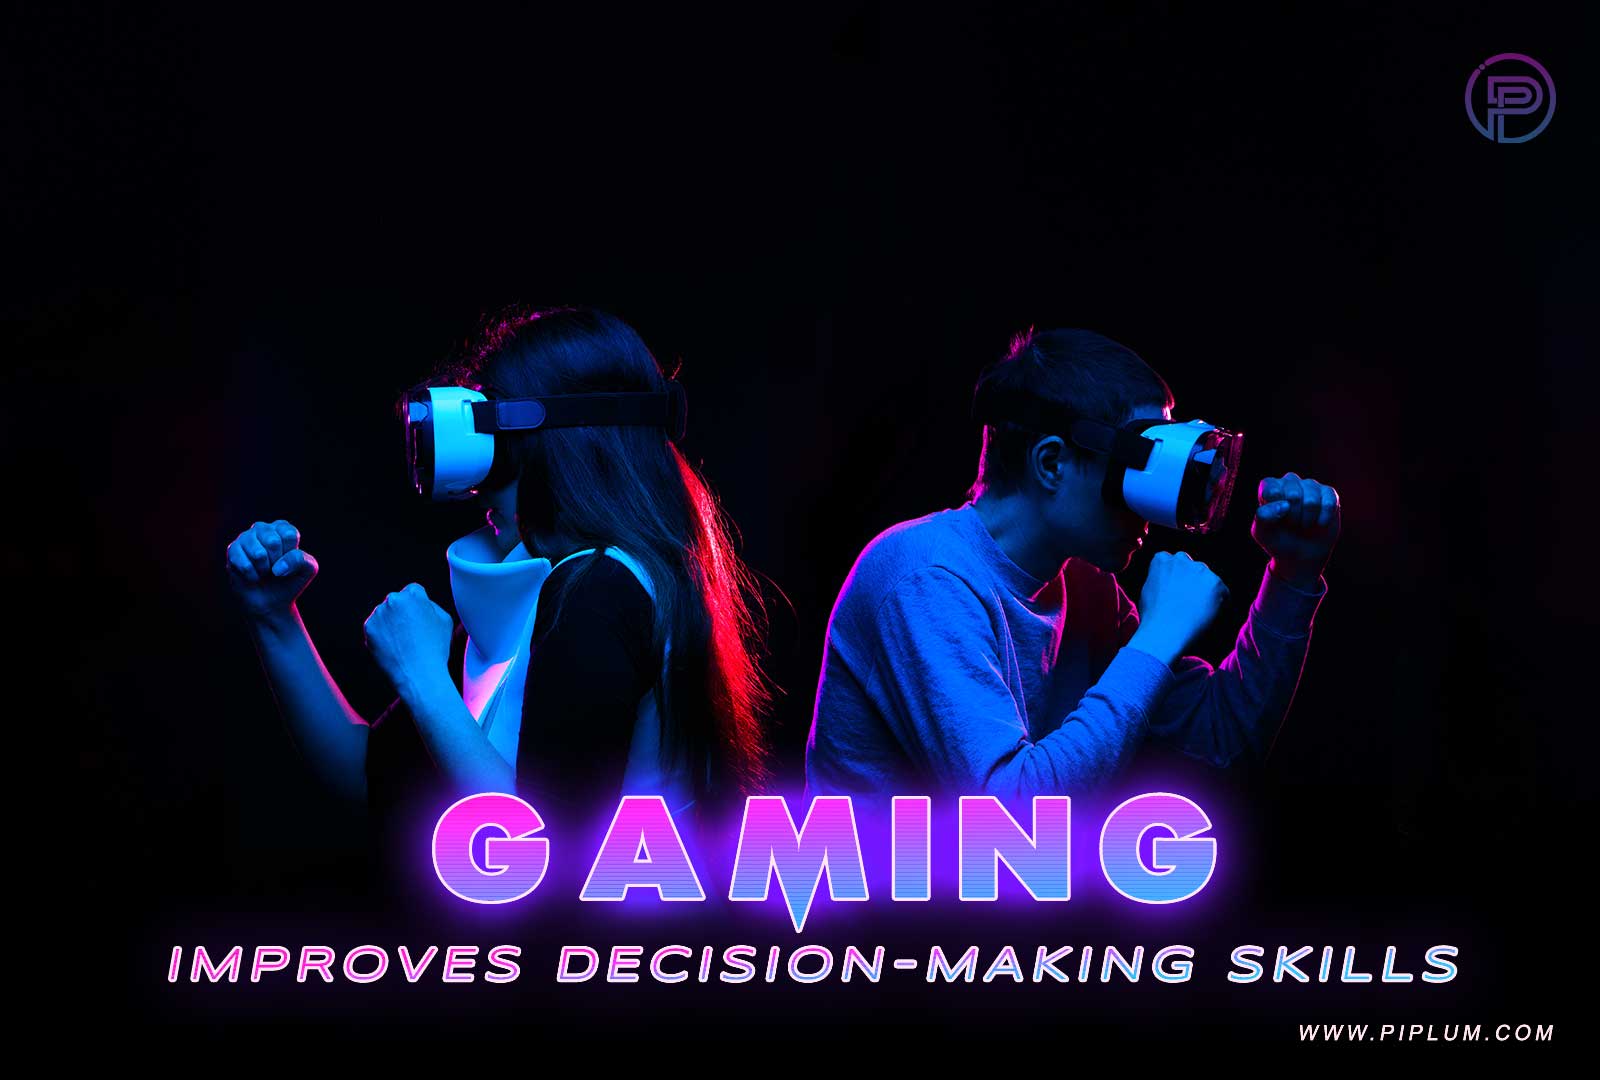 Gaming improves decision-making skills. 